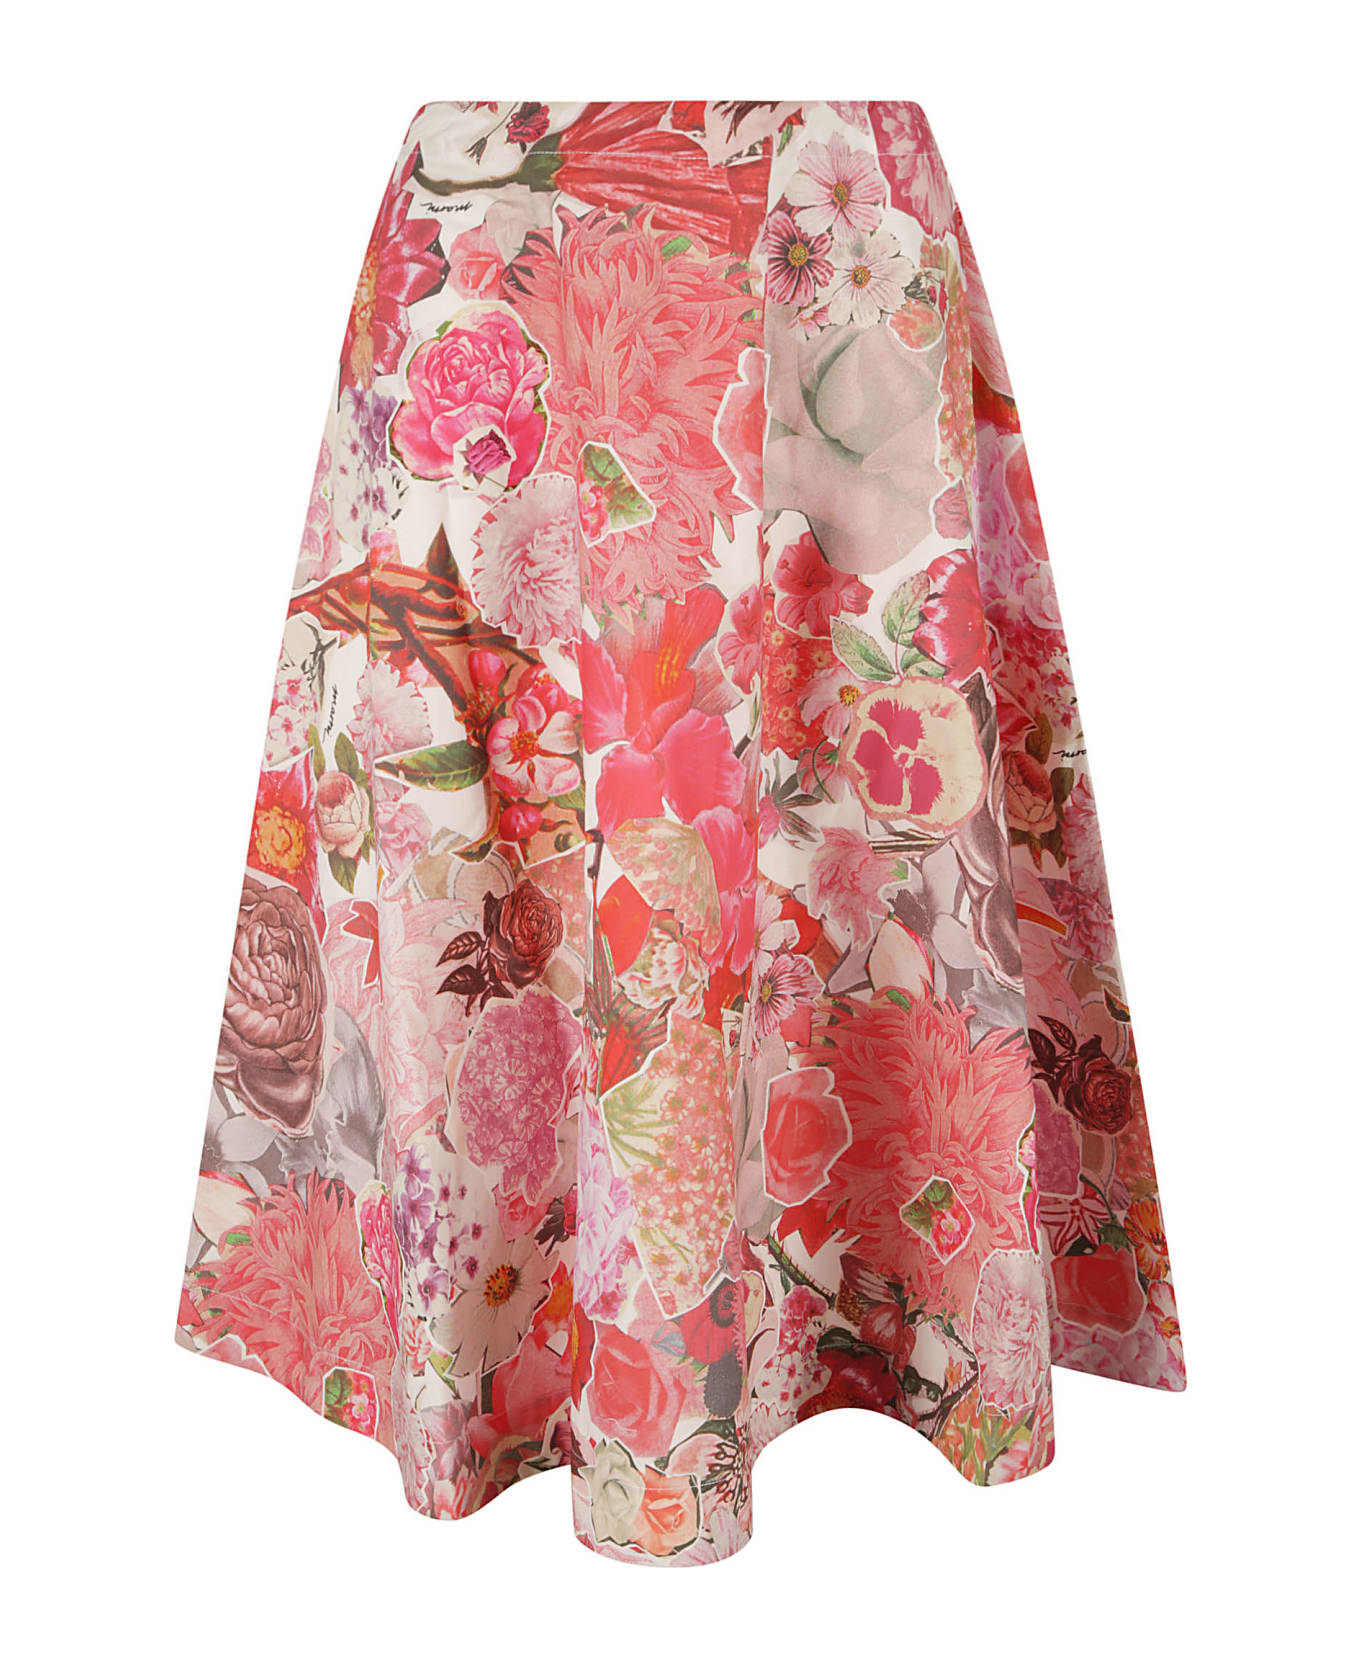 Marni Flower Print Skirt - Pink